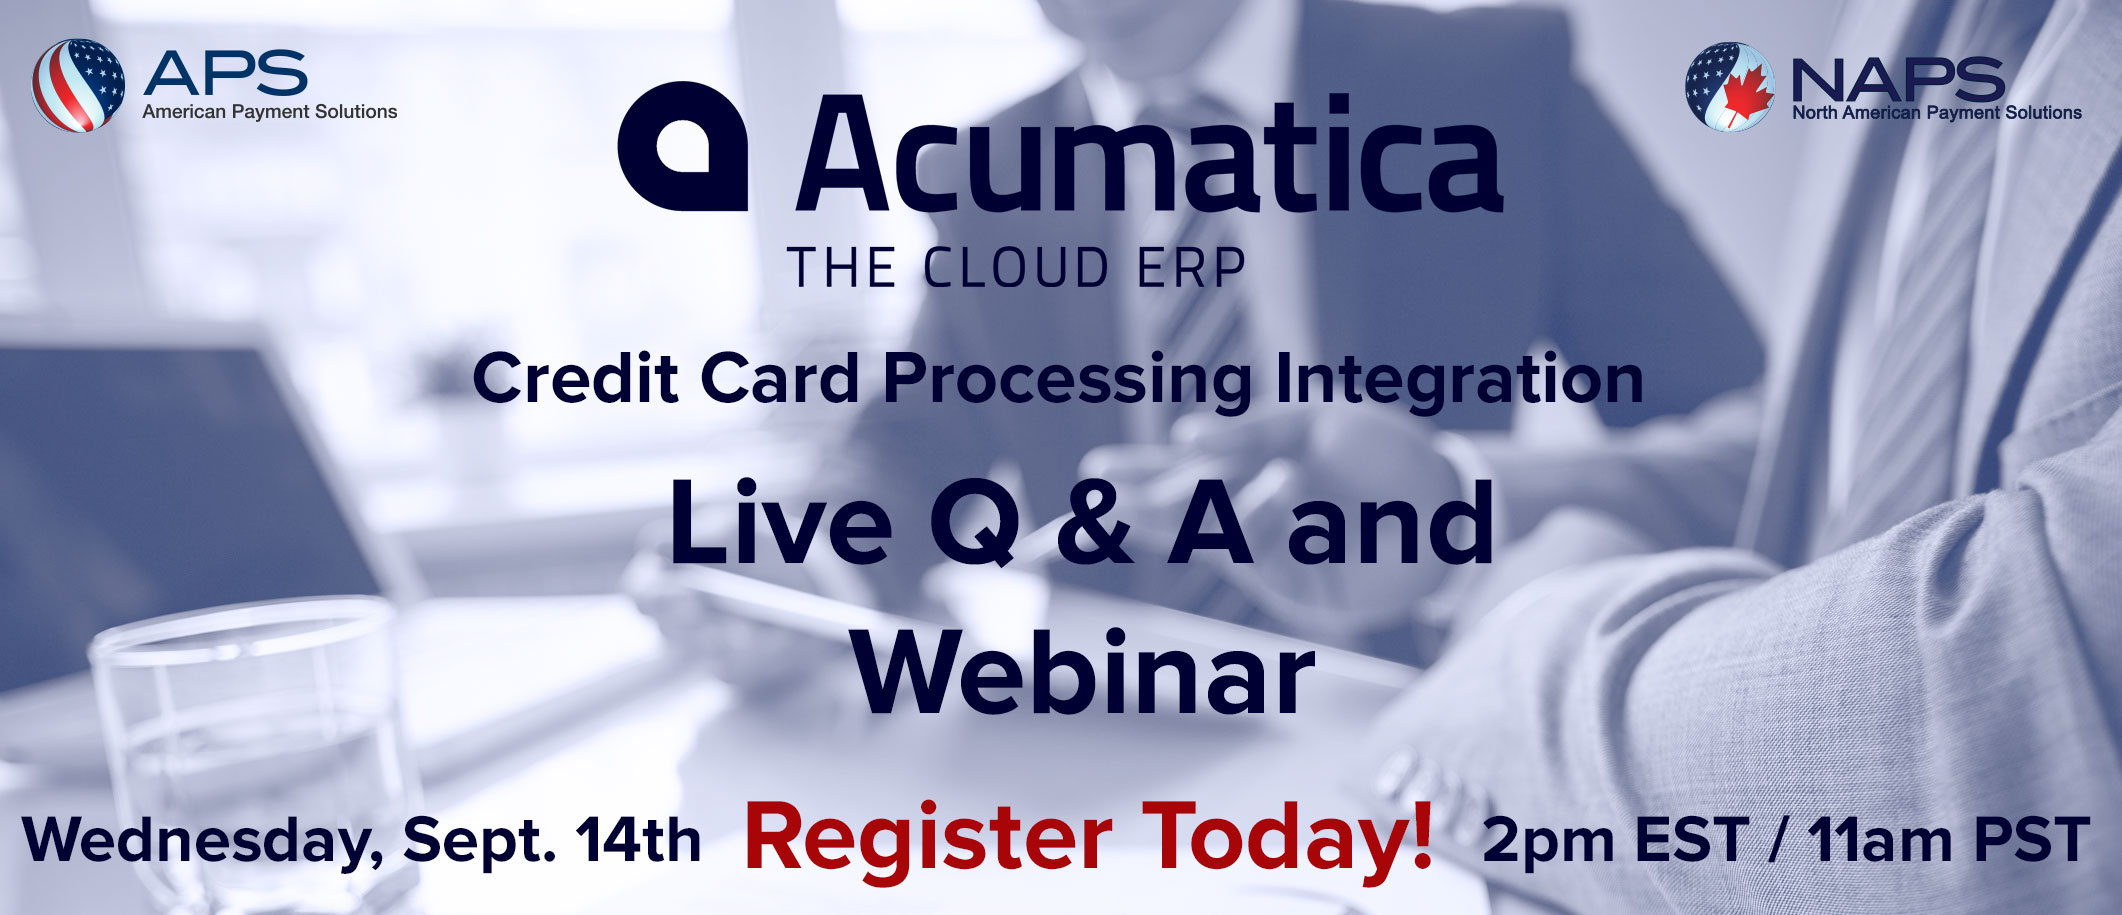 Acumatica Credit Card Processing Integration